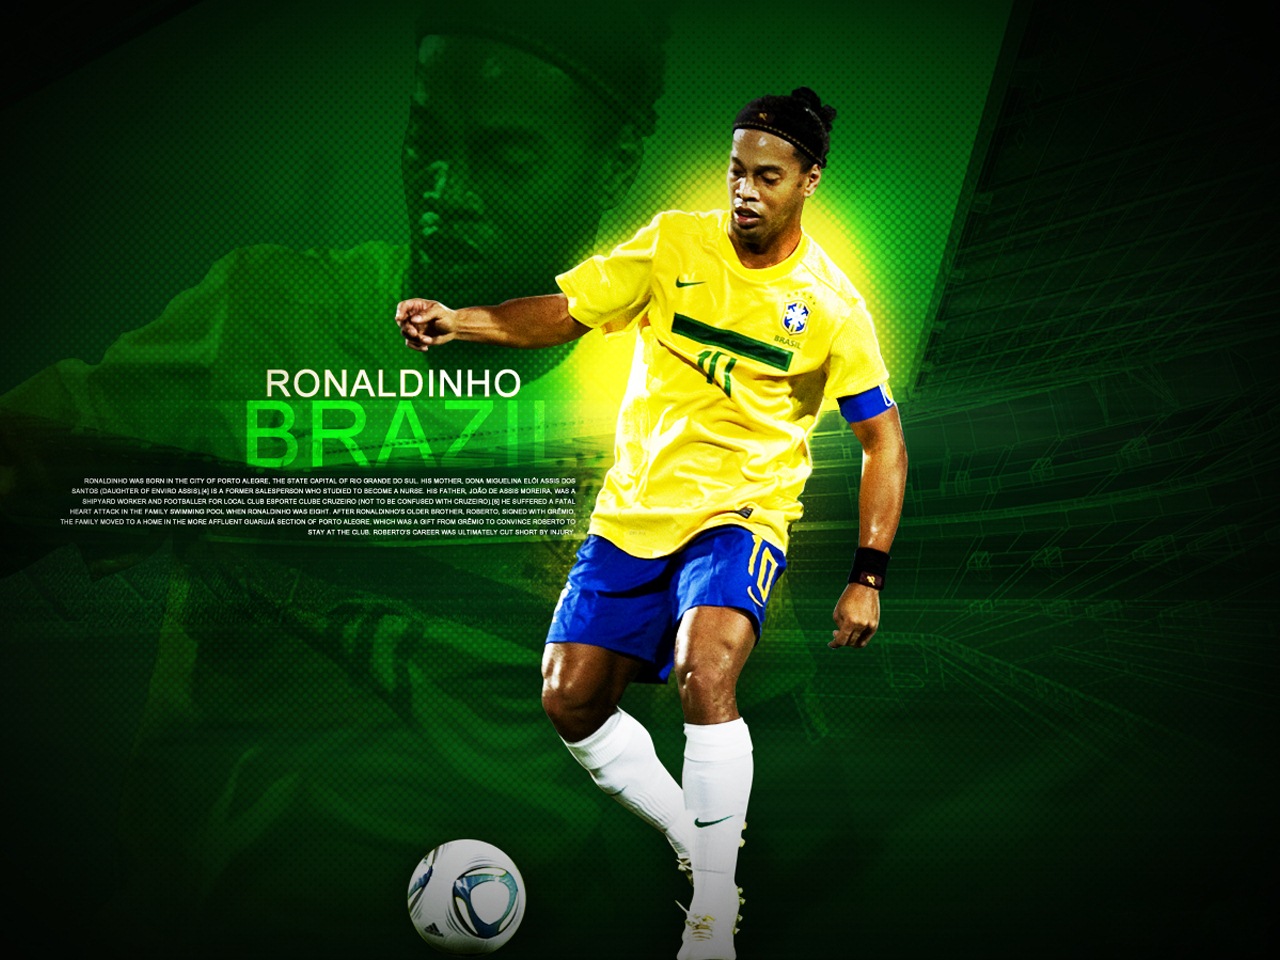 https://blogger.googleusercontent.com/img/b/R29vZ2xl/AVvXsEhzplDkRsuUNOPCAYNKRYvu7G2w64Ux9Oiue6n3jJQbqKhinvDXDdA40fkhcpOkEKehNPQhV6rlsM78H1bRsqgLzpJiQvQX4Y93raDJGauulAWG2T8-W9z19OJ8fszakymwyM-UHigosRo/s1600/Ronaldinho-Brazil-Wallpaper.jpg